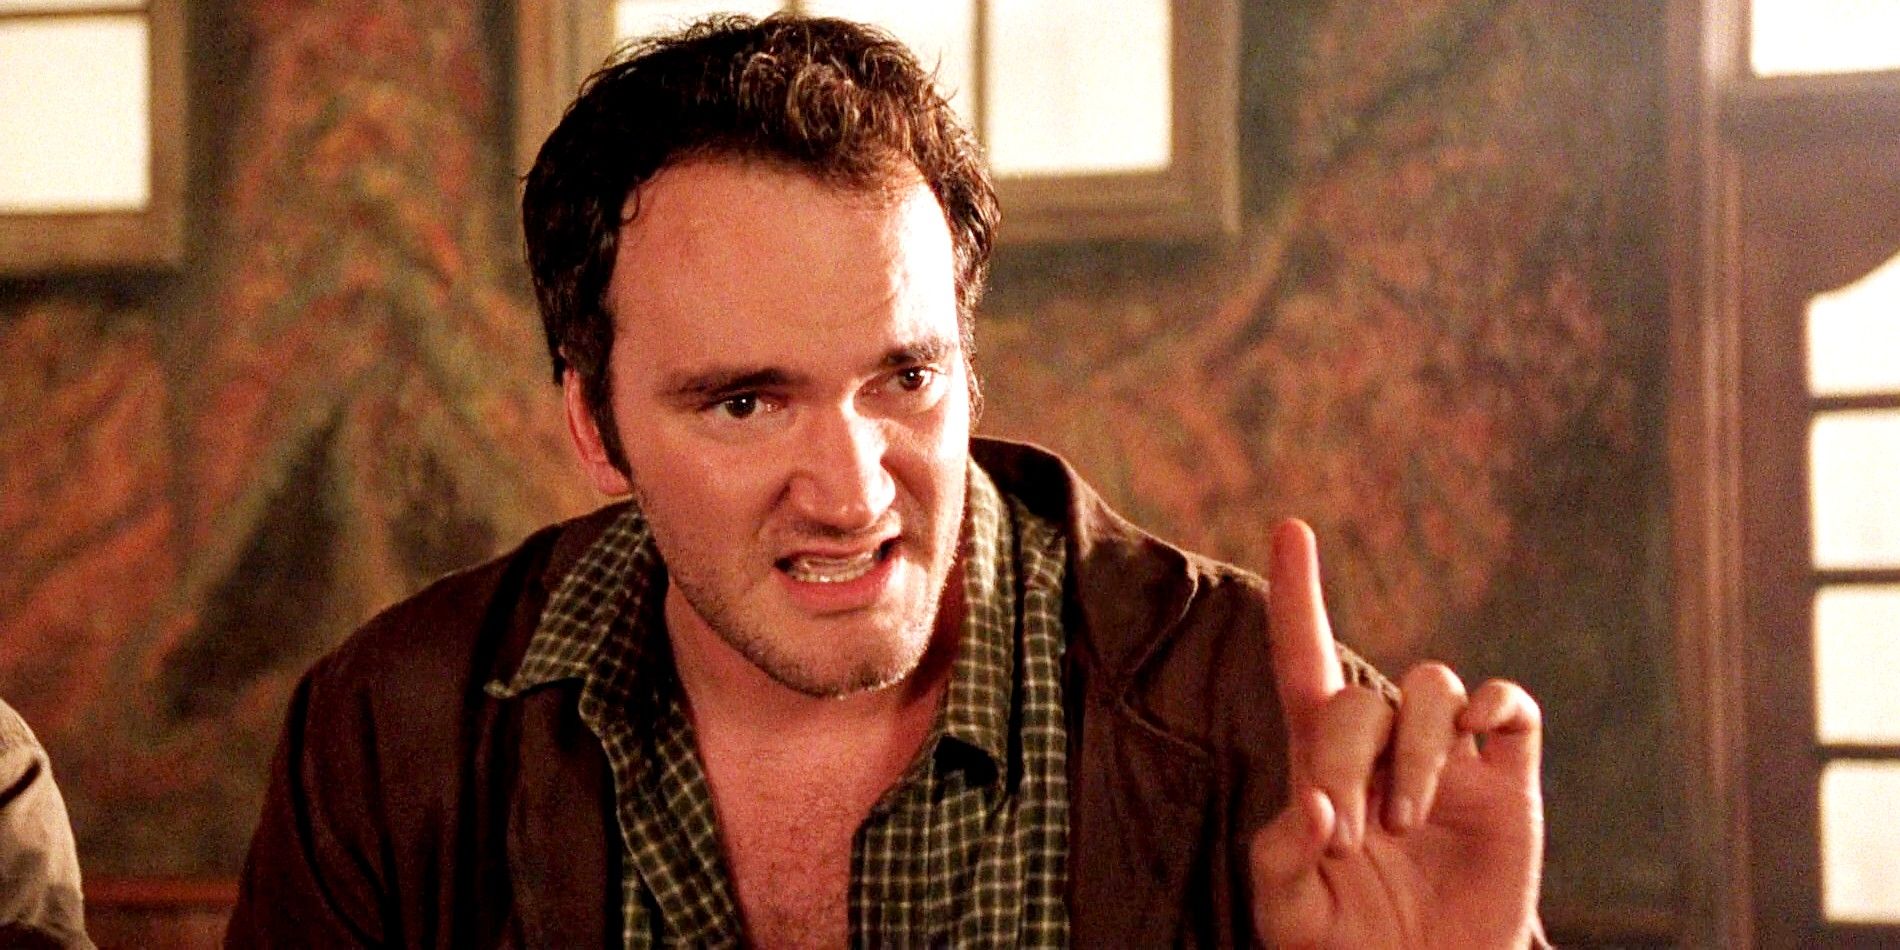 Quentin Tarantino points his finger up in Desperado